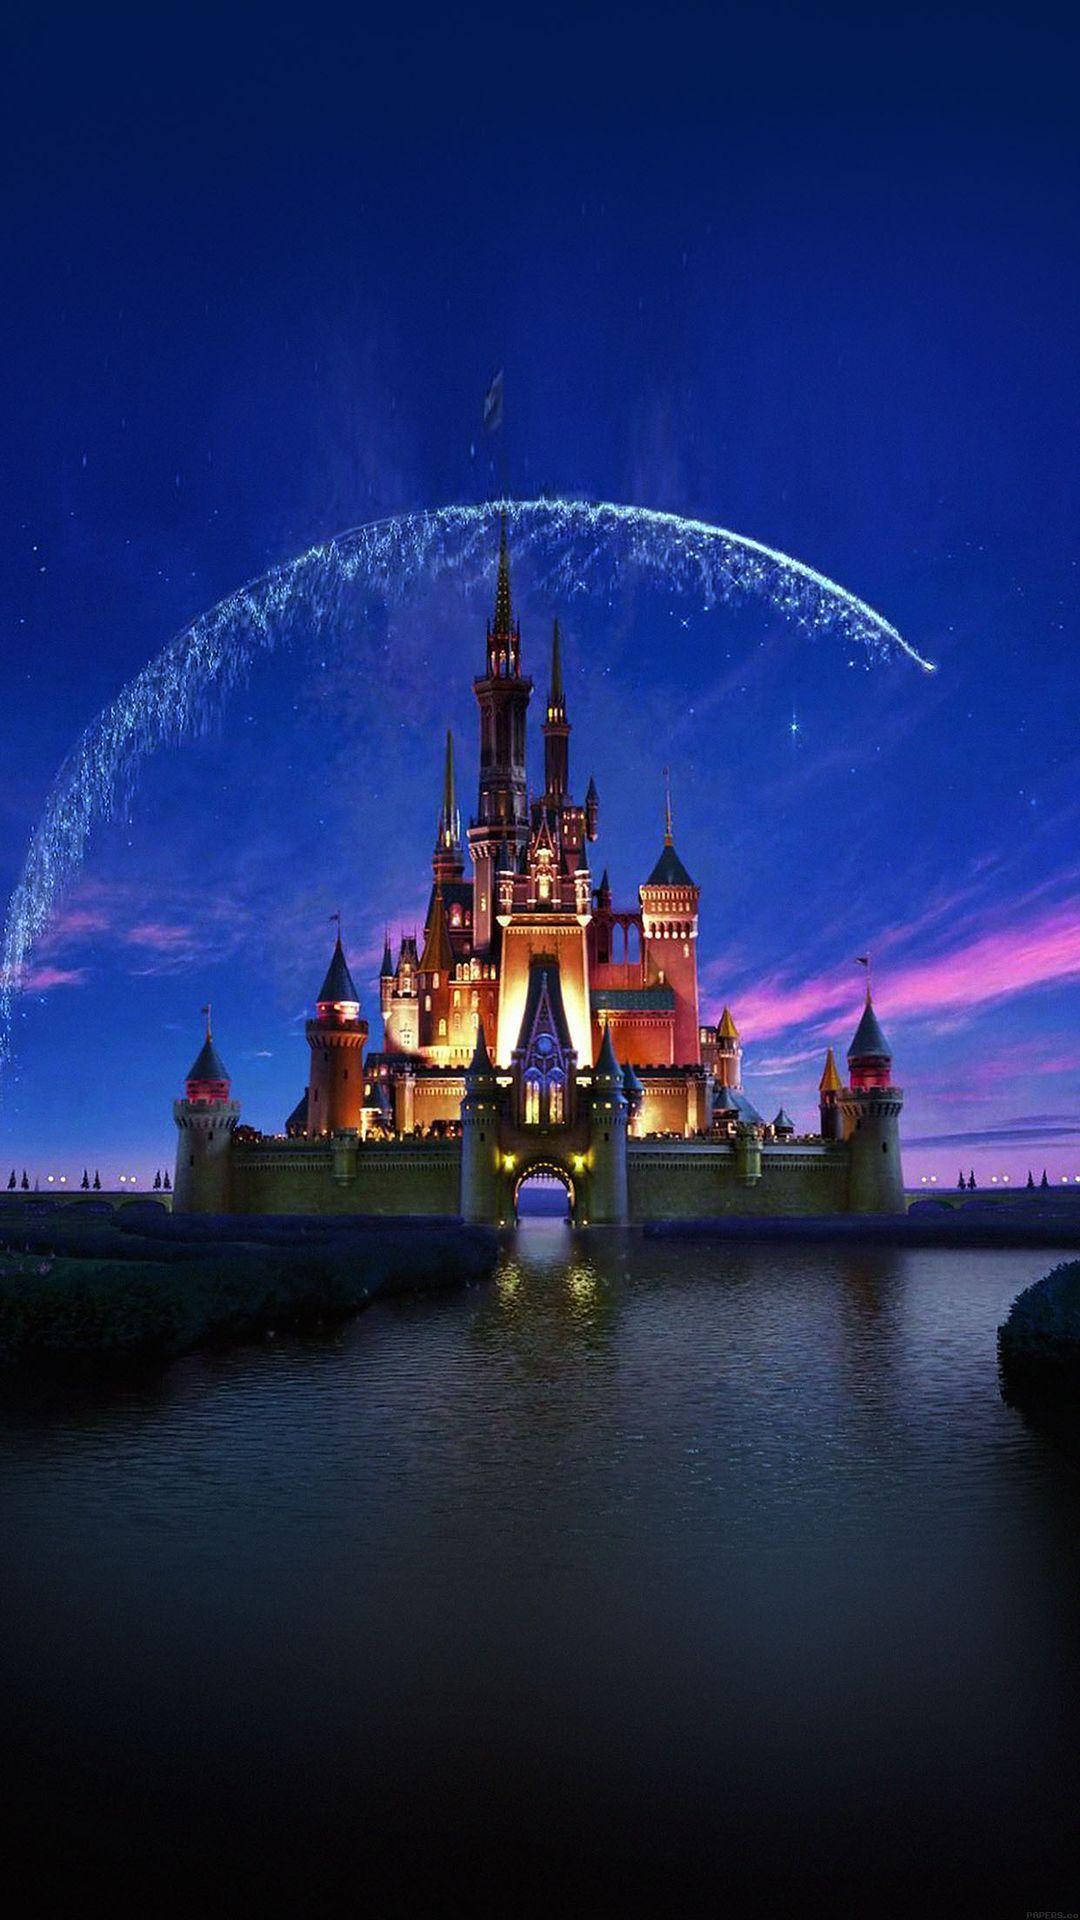 Tap image for more iPhone Disney wallpaper! Disney castle artwork